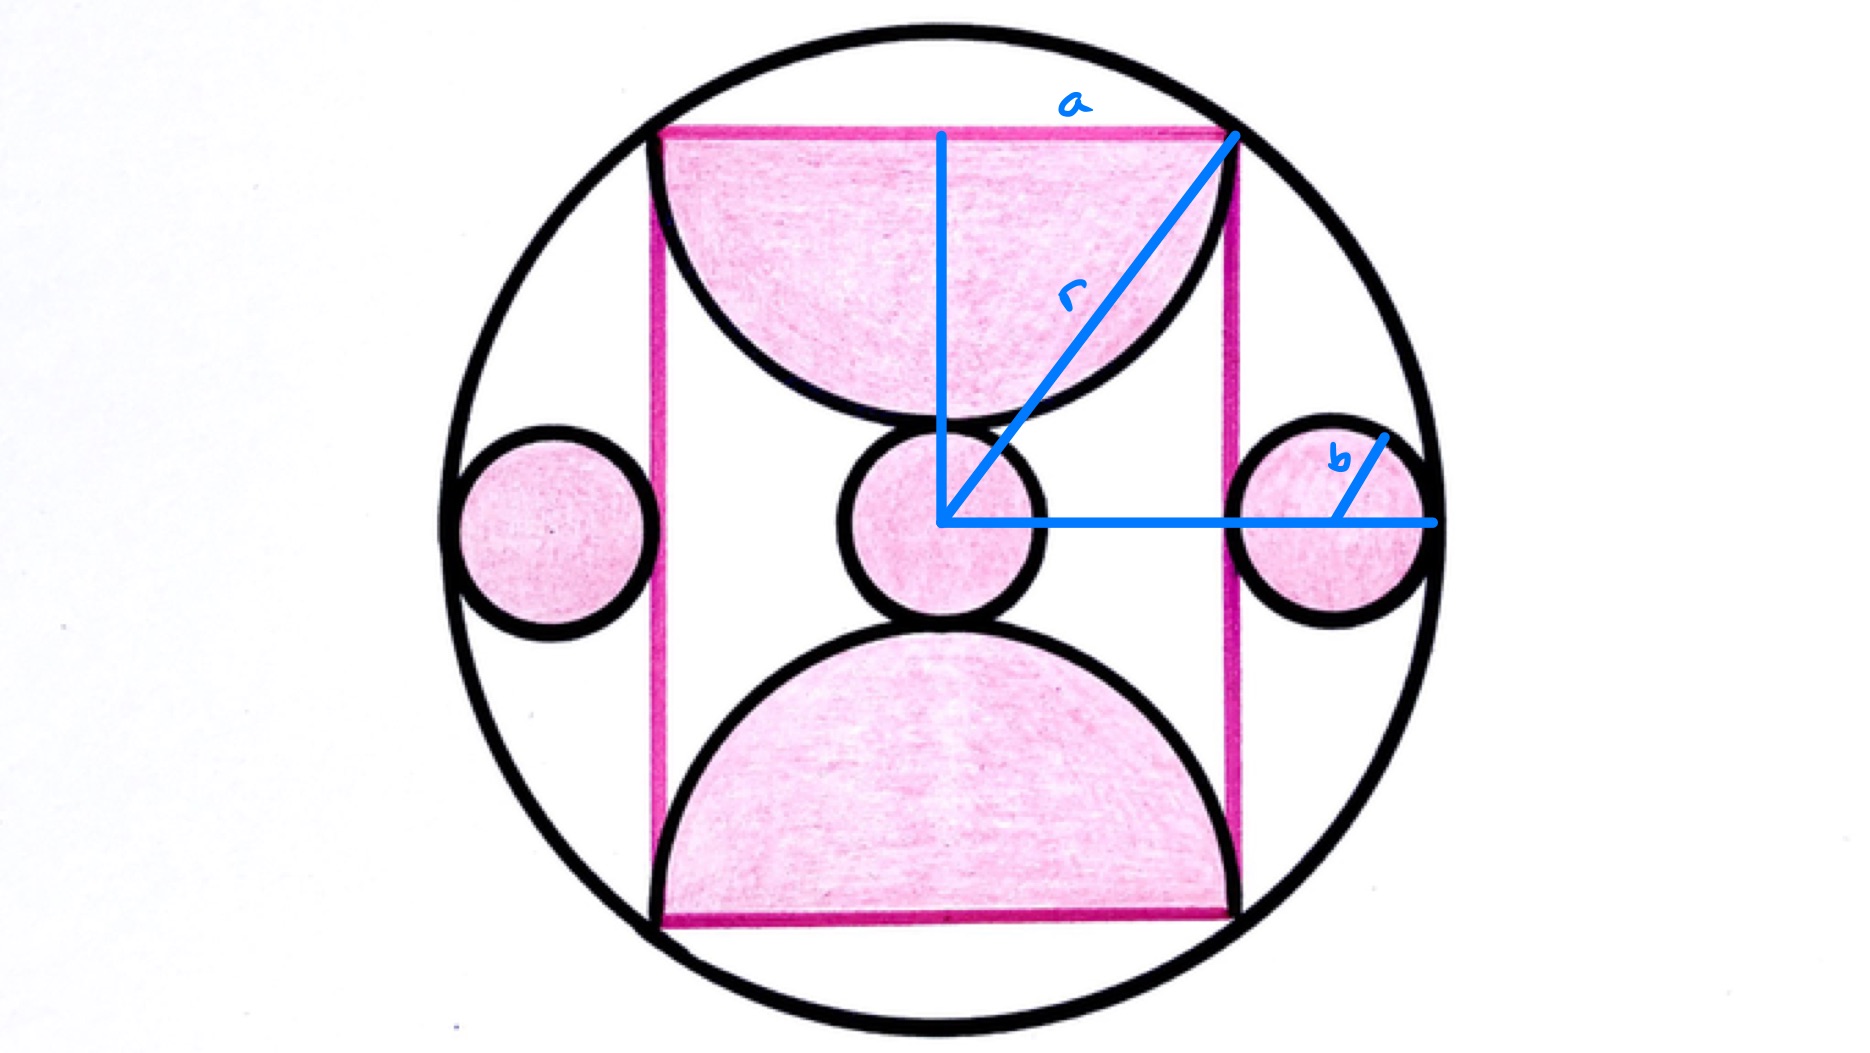 Three circles and two semi-circles in a circle labelled